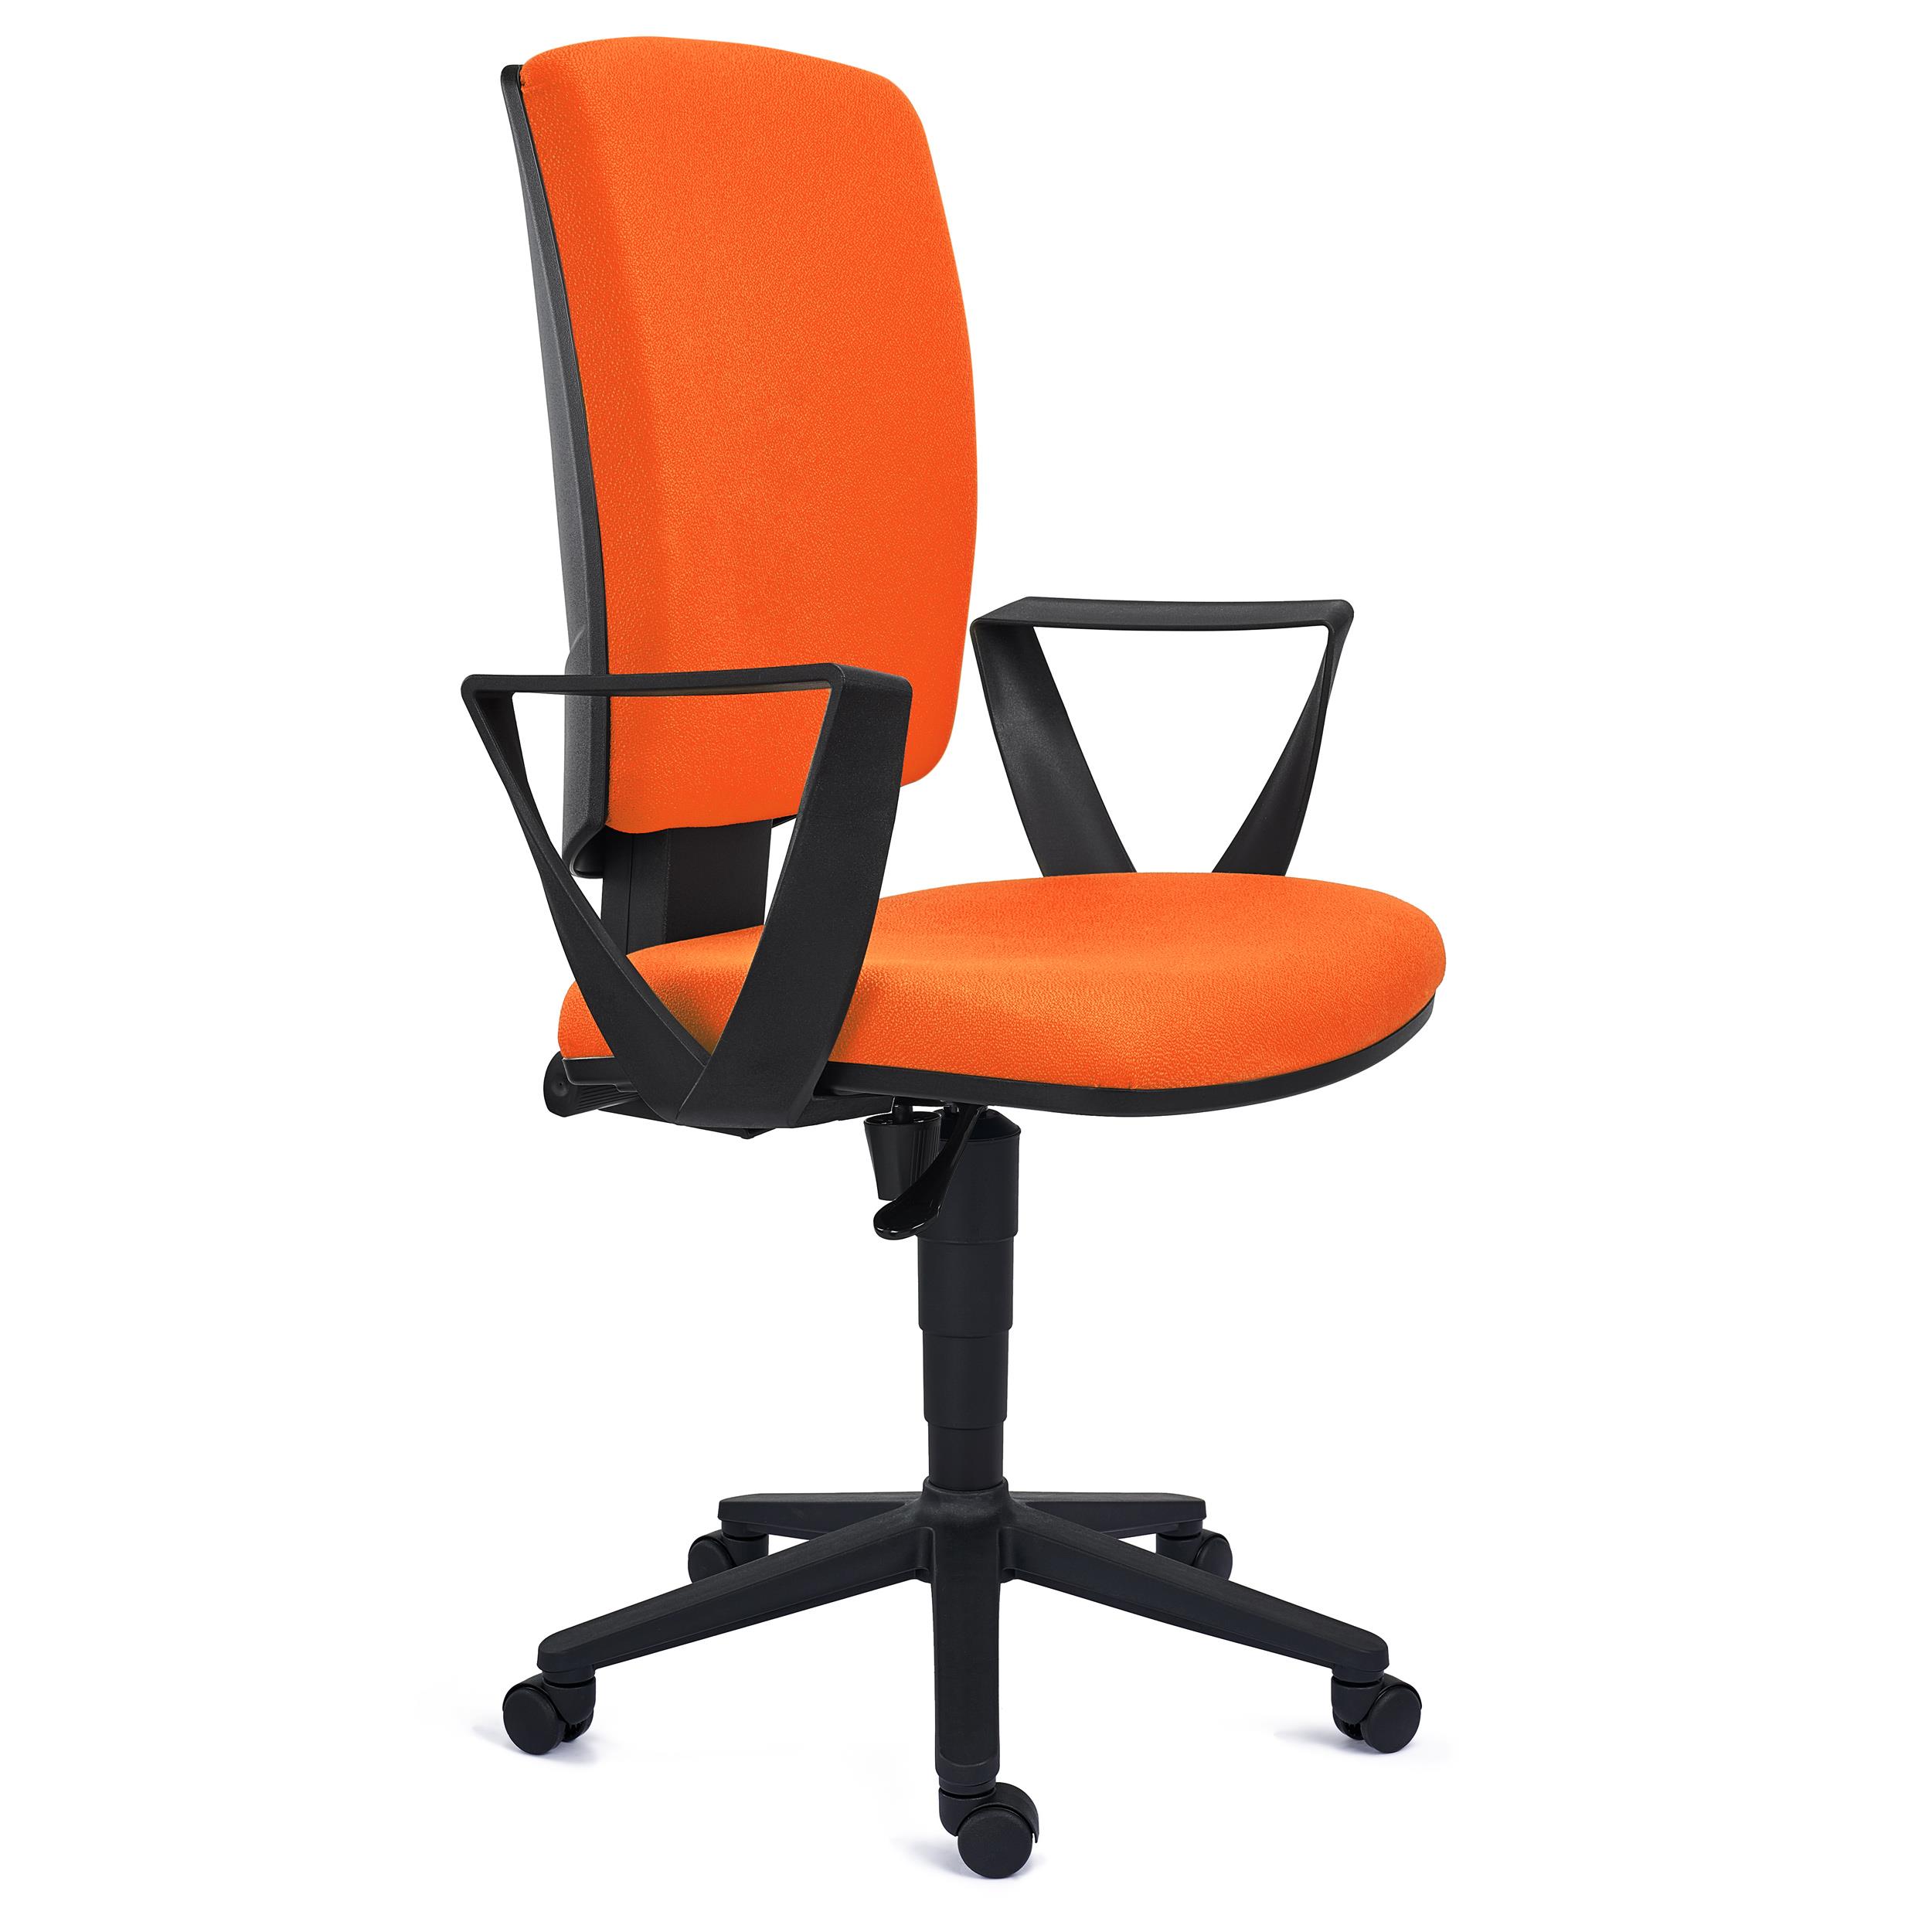 Bürostuhl ATLAS STOFF, verstellbare Rückenlehne, dicke Polsterung, Farbe Orange